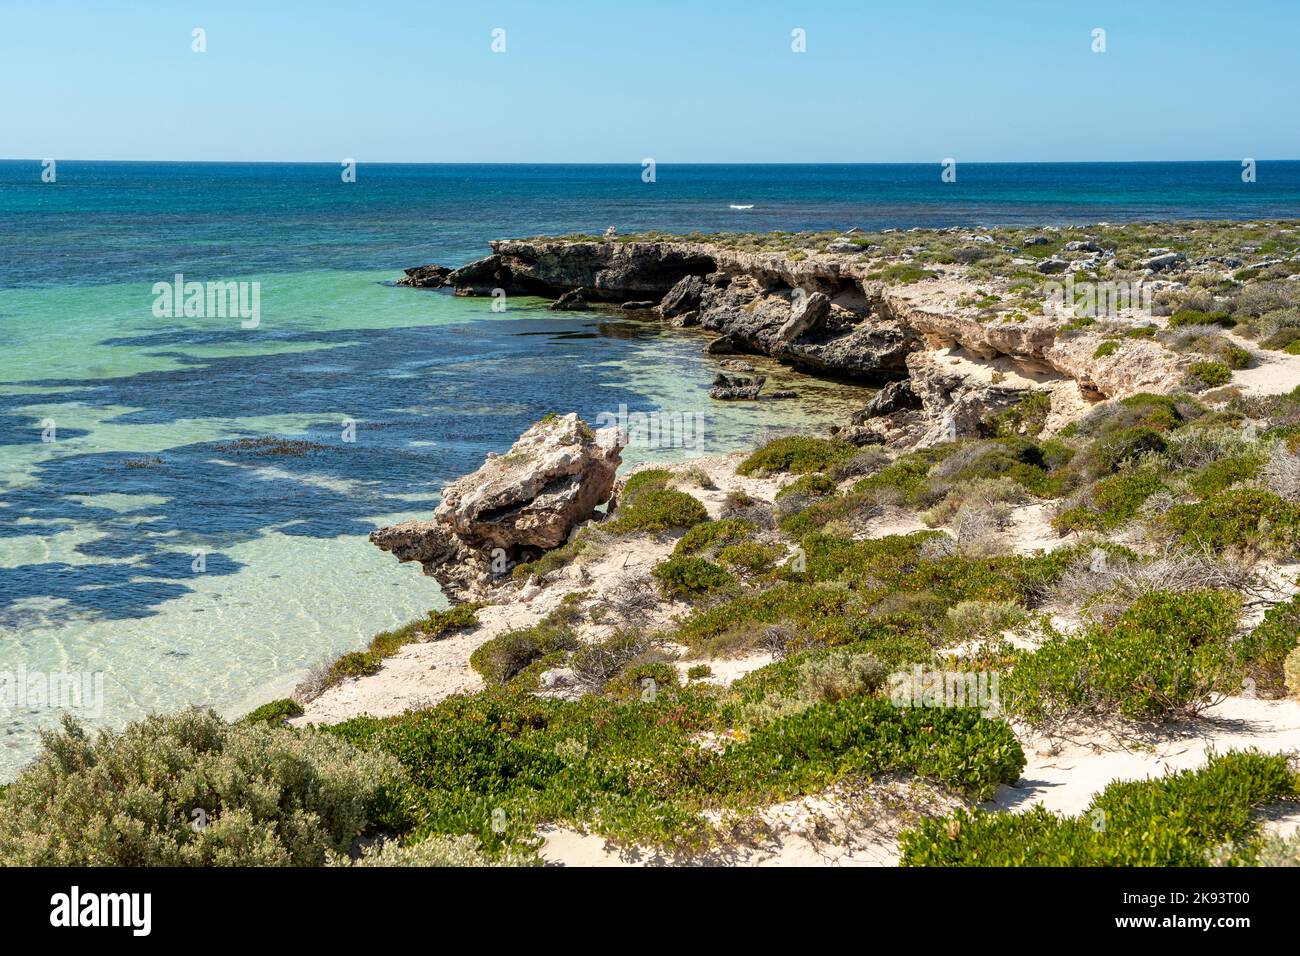 Rocky Headland at Turtle Bay, East Wallabi, Houtman Abrolhos Islands, WA, Australia Stock Photo